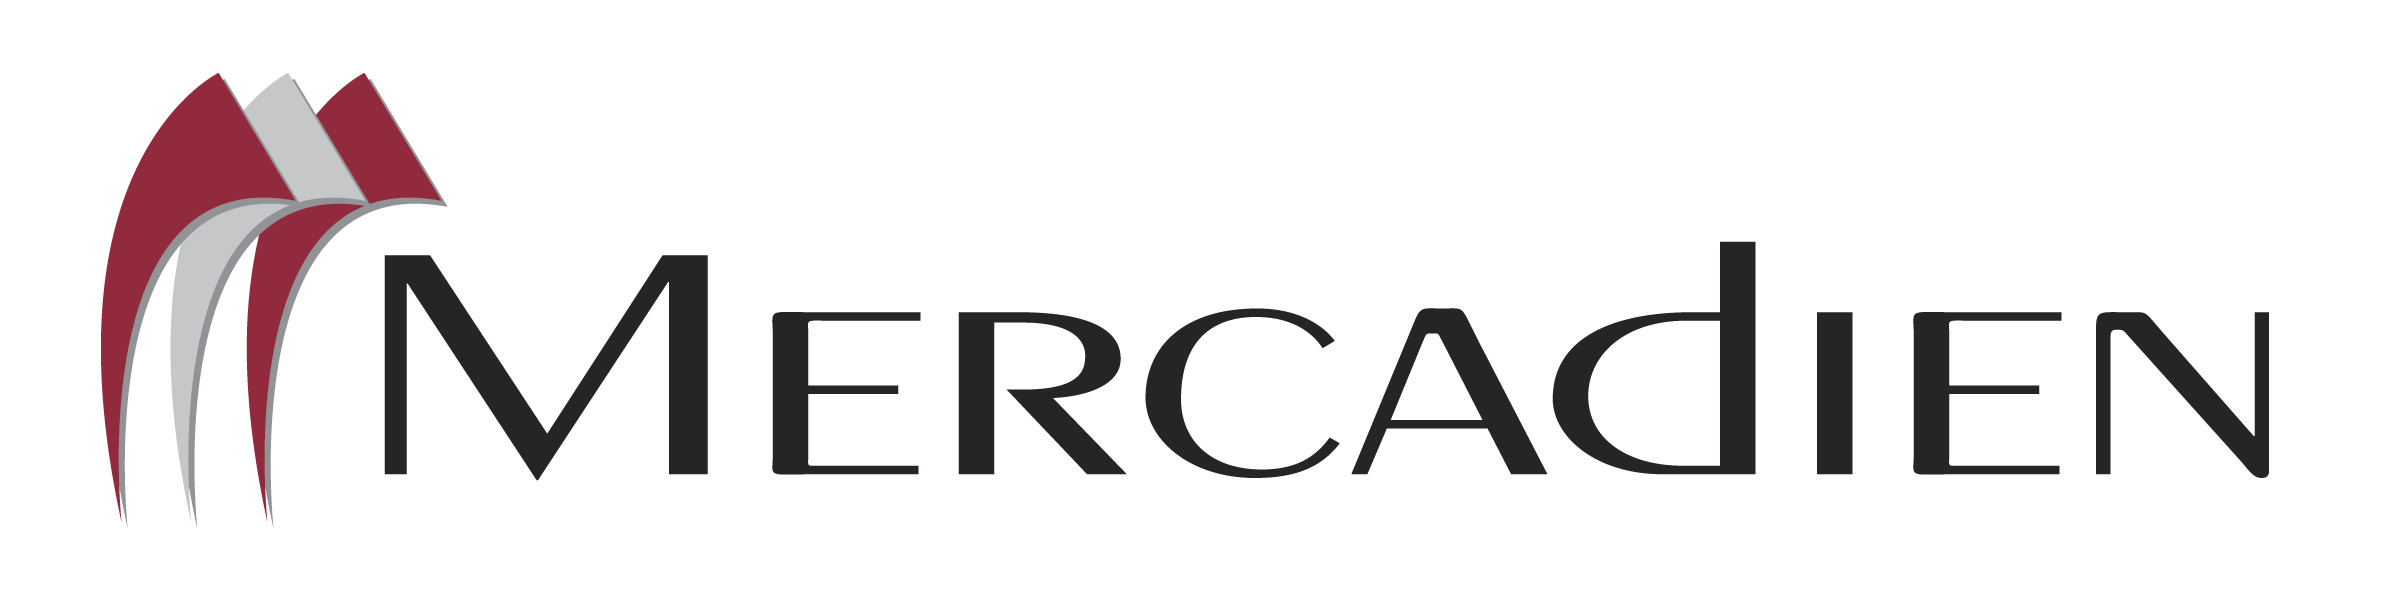 The Mercadien Group logo